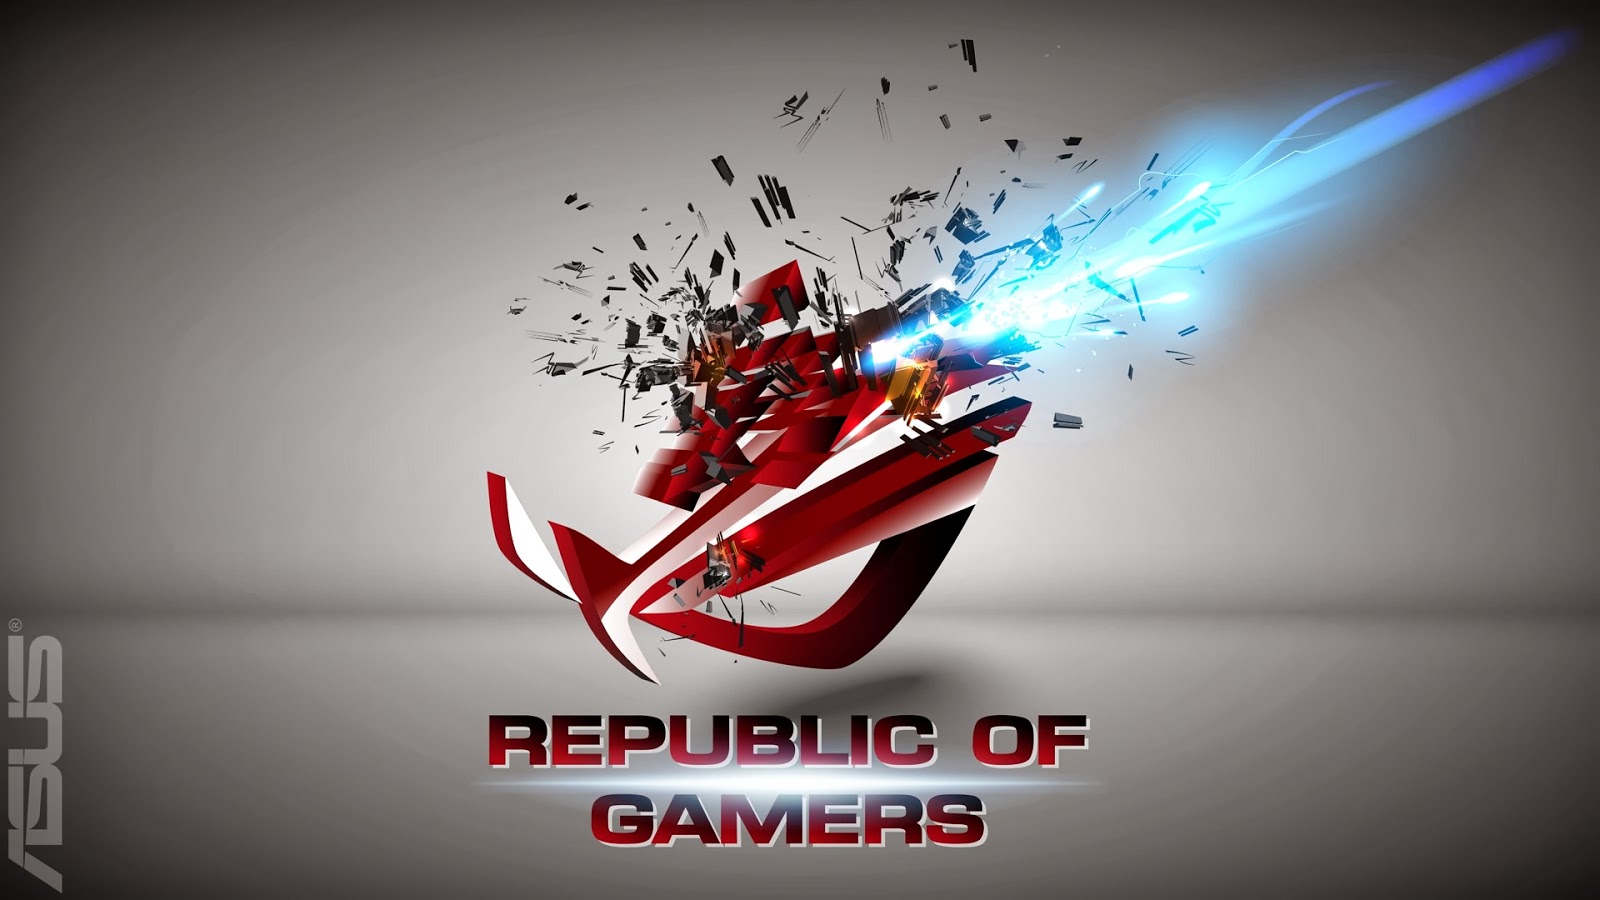 Asus Rog Republic Of Gamers Shattered Explosion HD Wallpaper Jpg